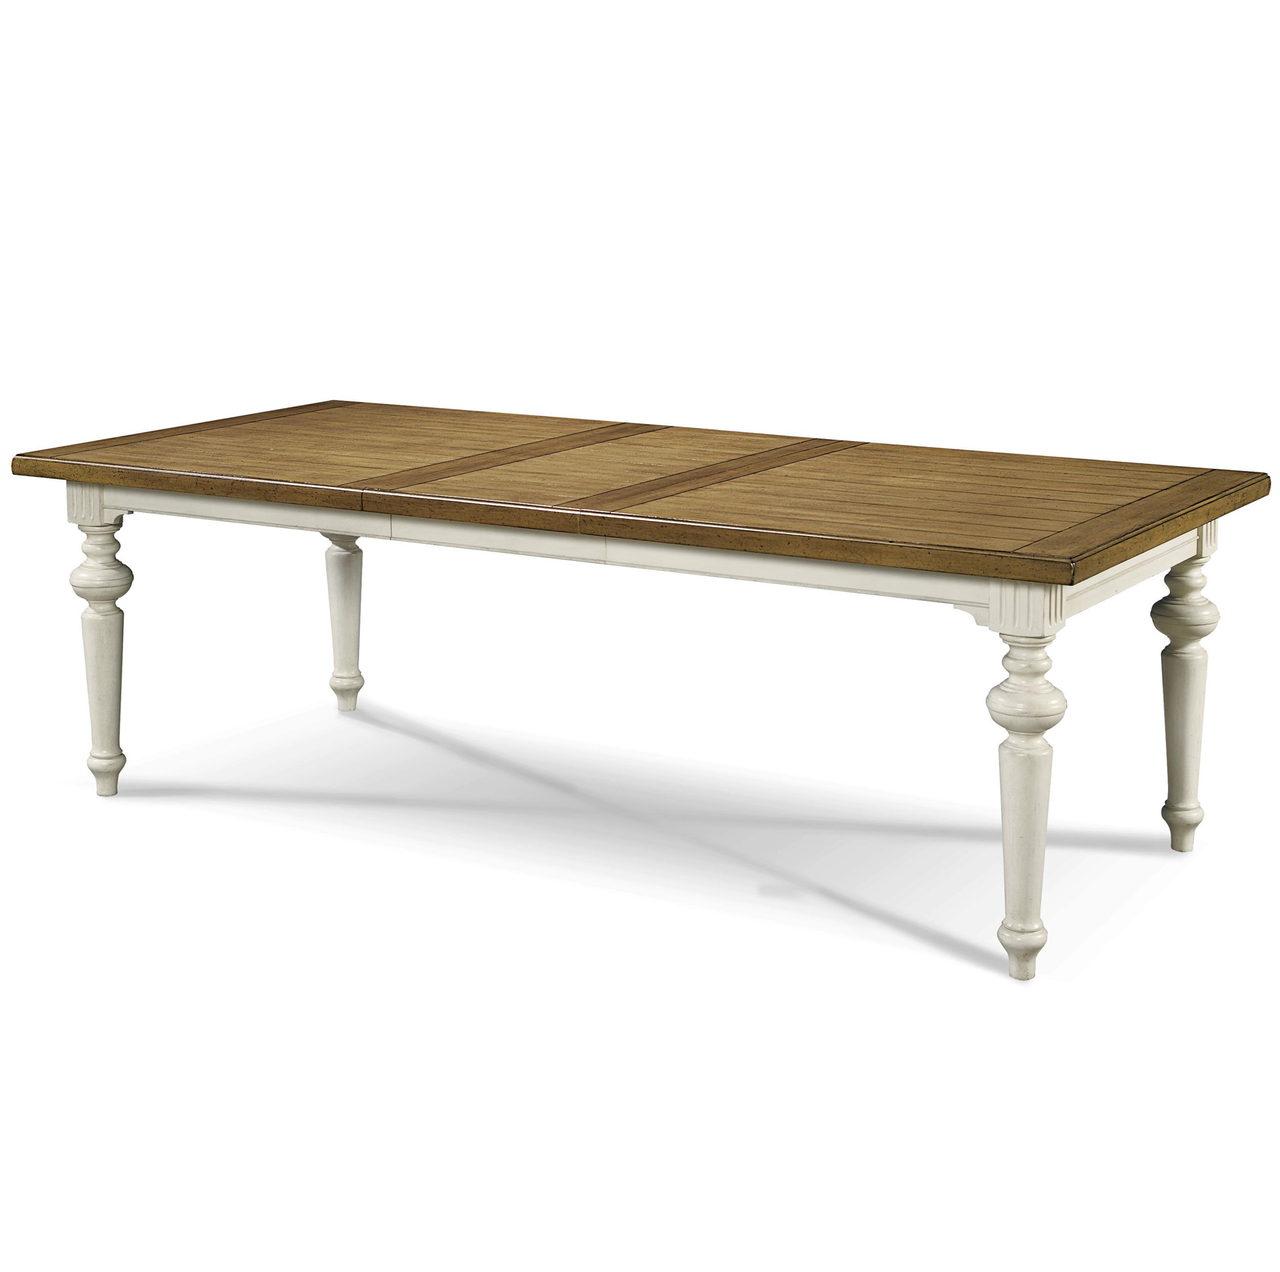 maple wood table